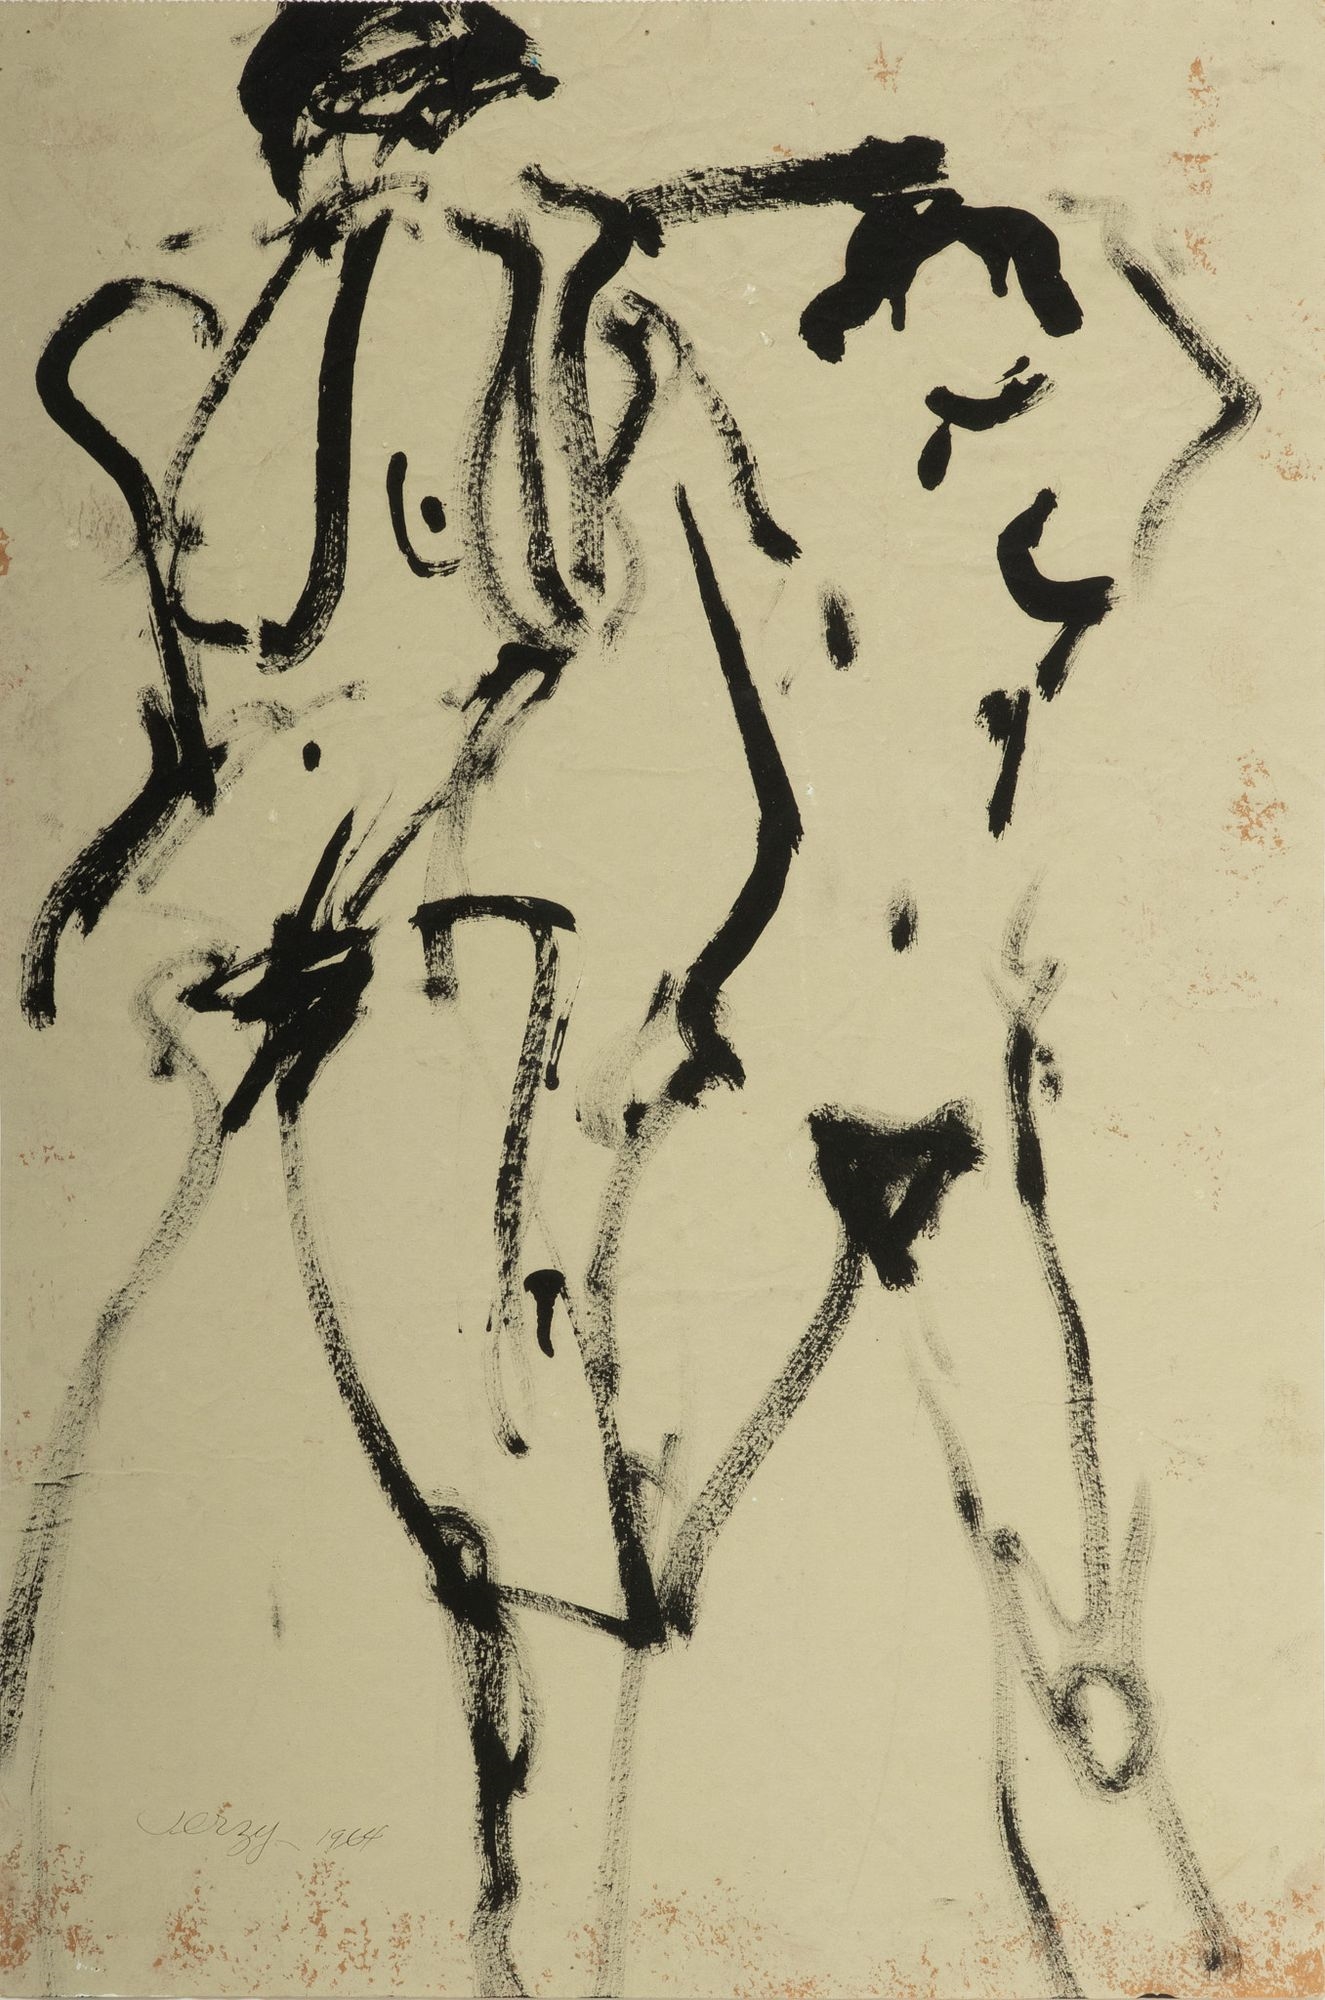 Richard Jerzy (American, 1943-2001) Gouache on Paper, Ca. 1964, "Female Nudes", H 19" W 12.5 - Richard Jerzy